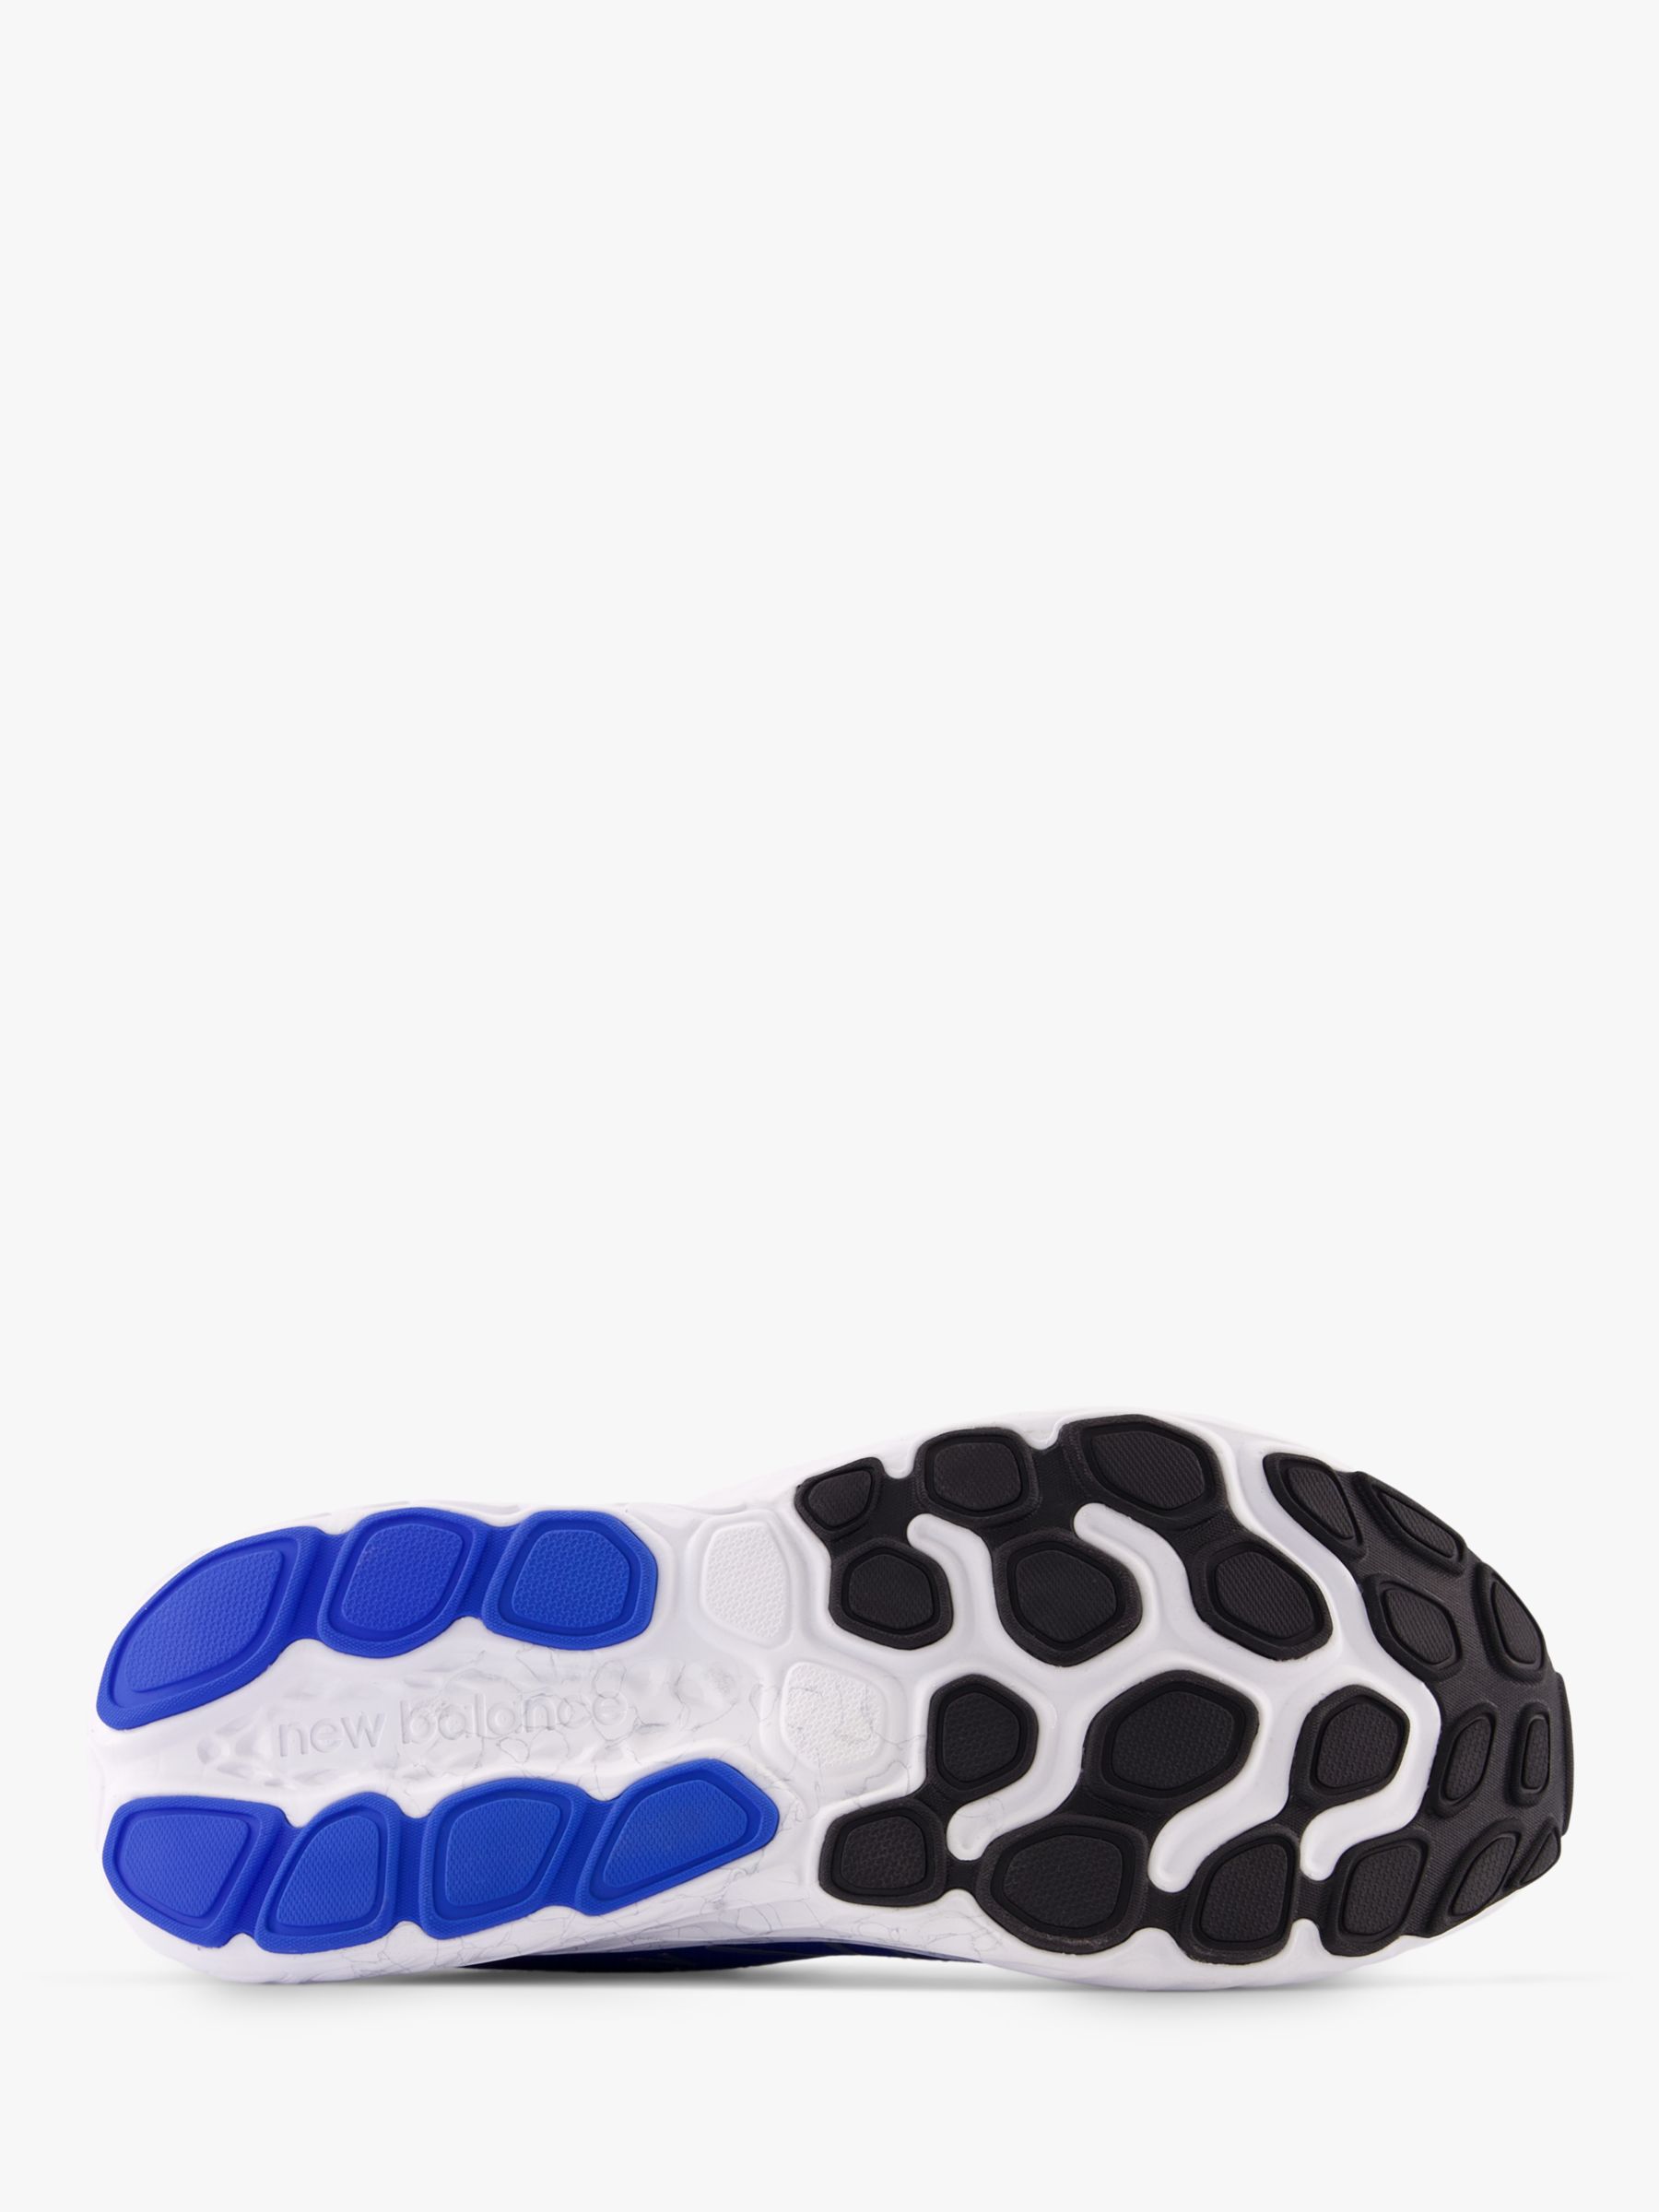 New Balance Fresh Foam X Evoz ST Men's Running Shoes, Blue Oasis 424, 10